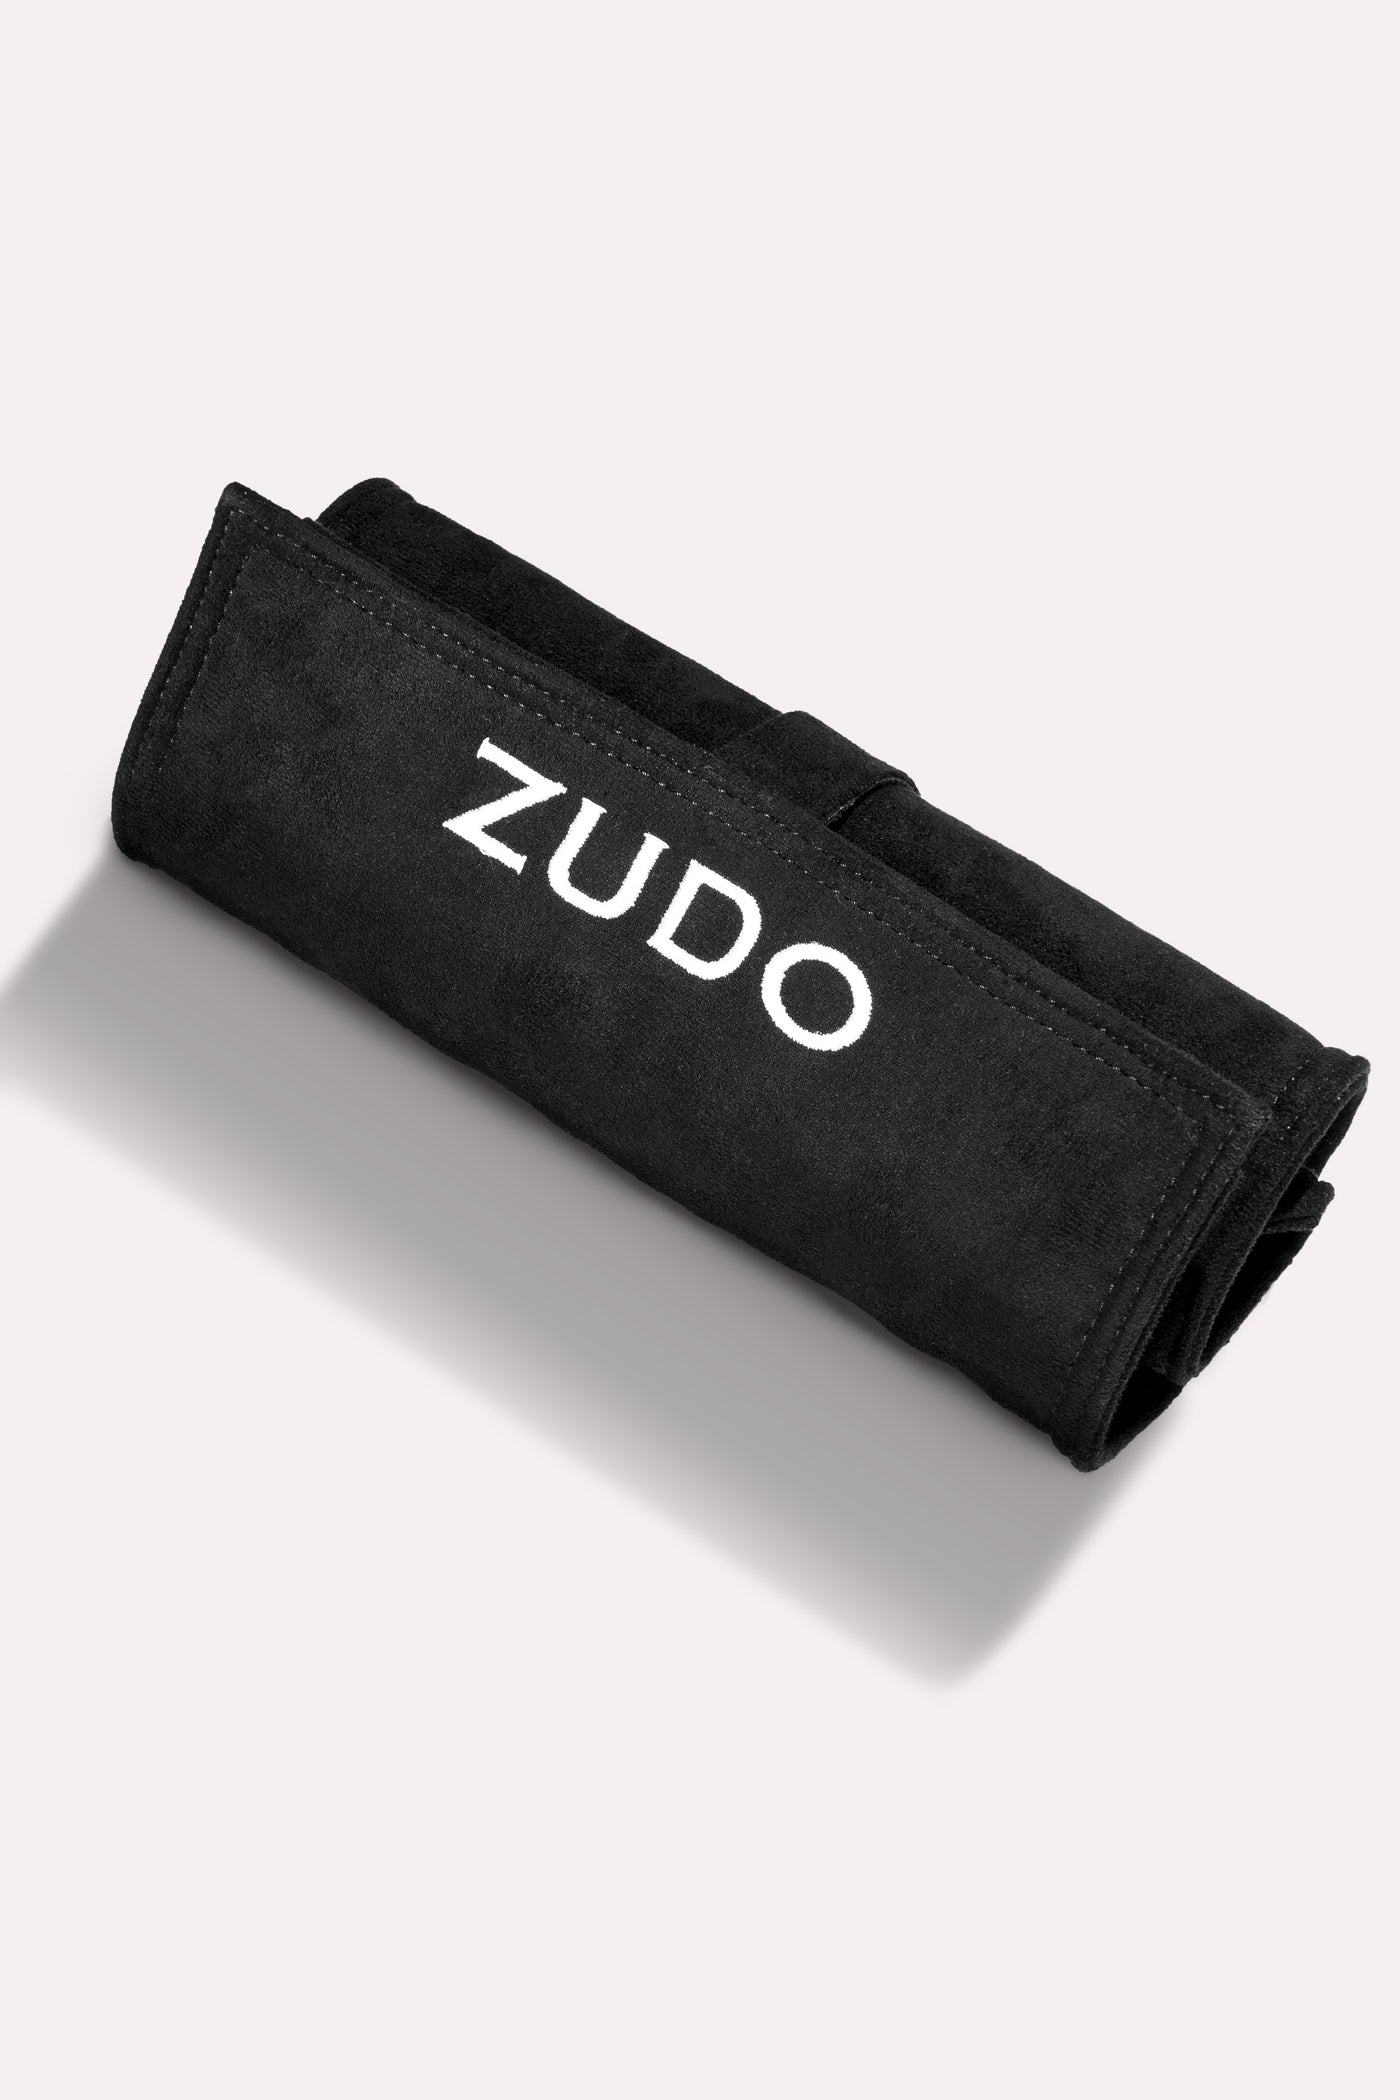 Black Friday Gift Guide | ZUDO